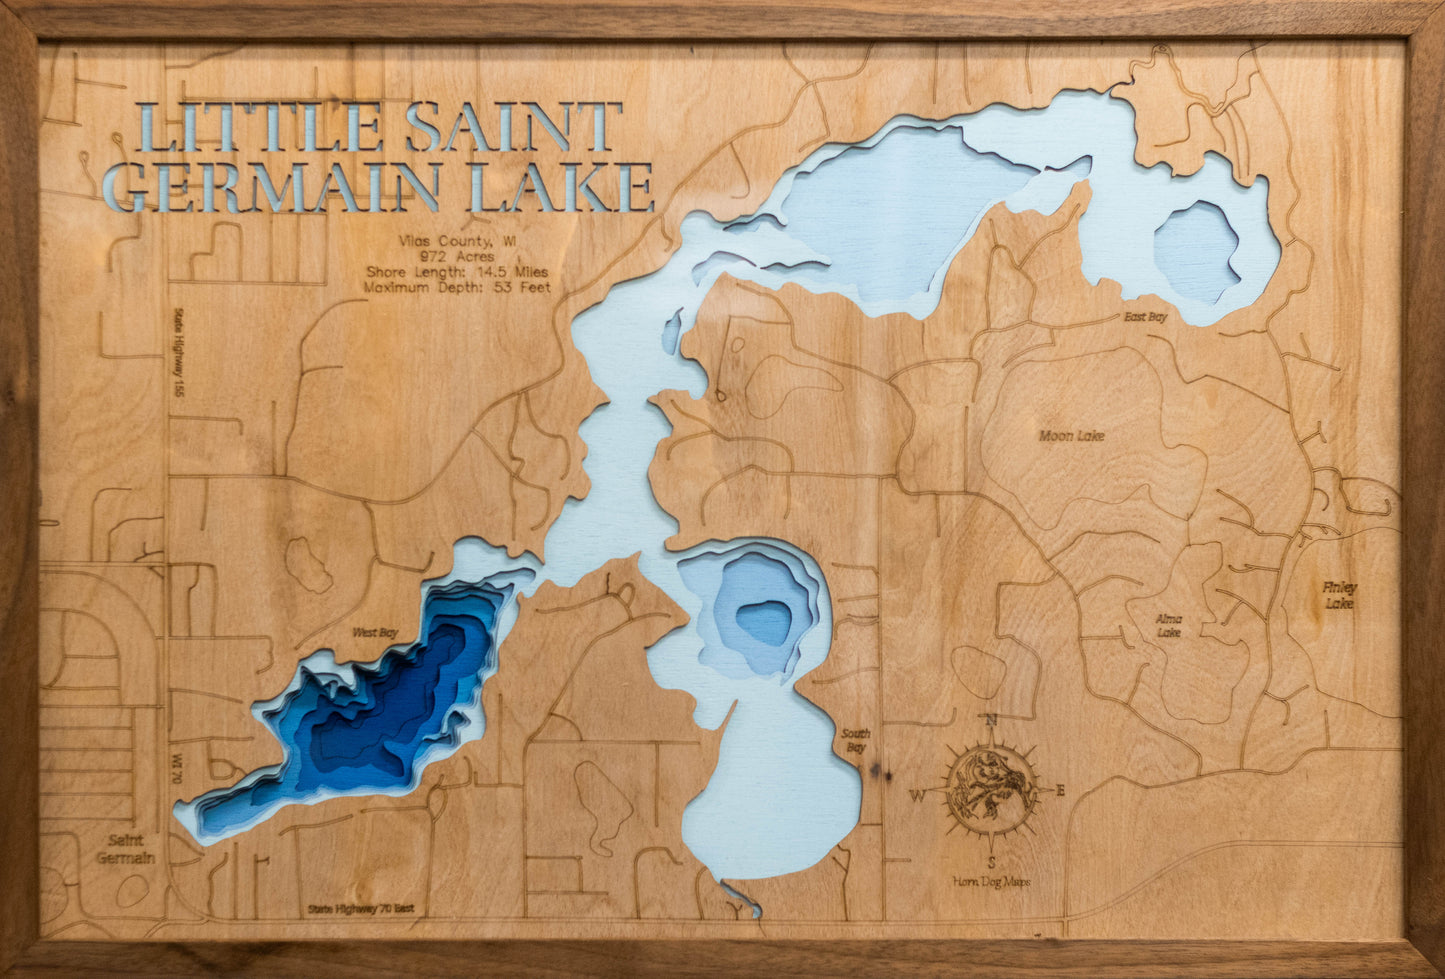 Little Saint Germain Lake in Vilas County, WI